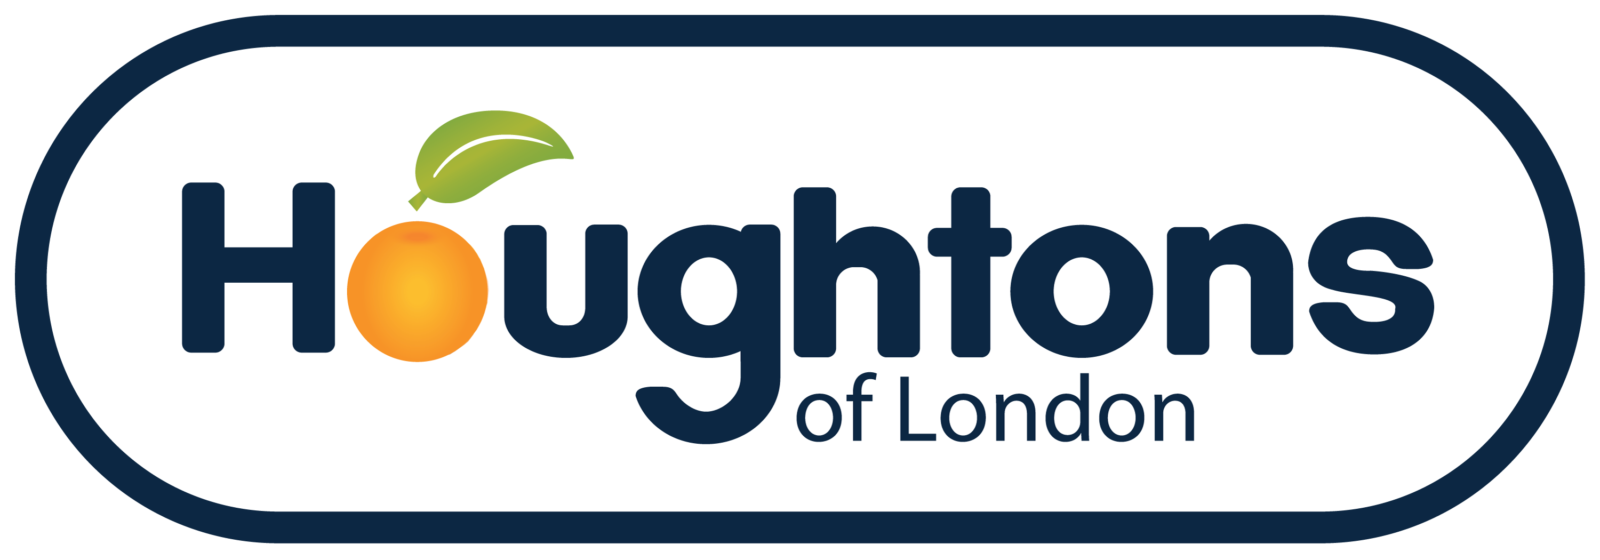 Houghtons of London logo